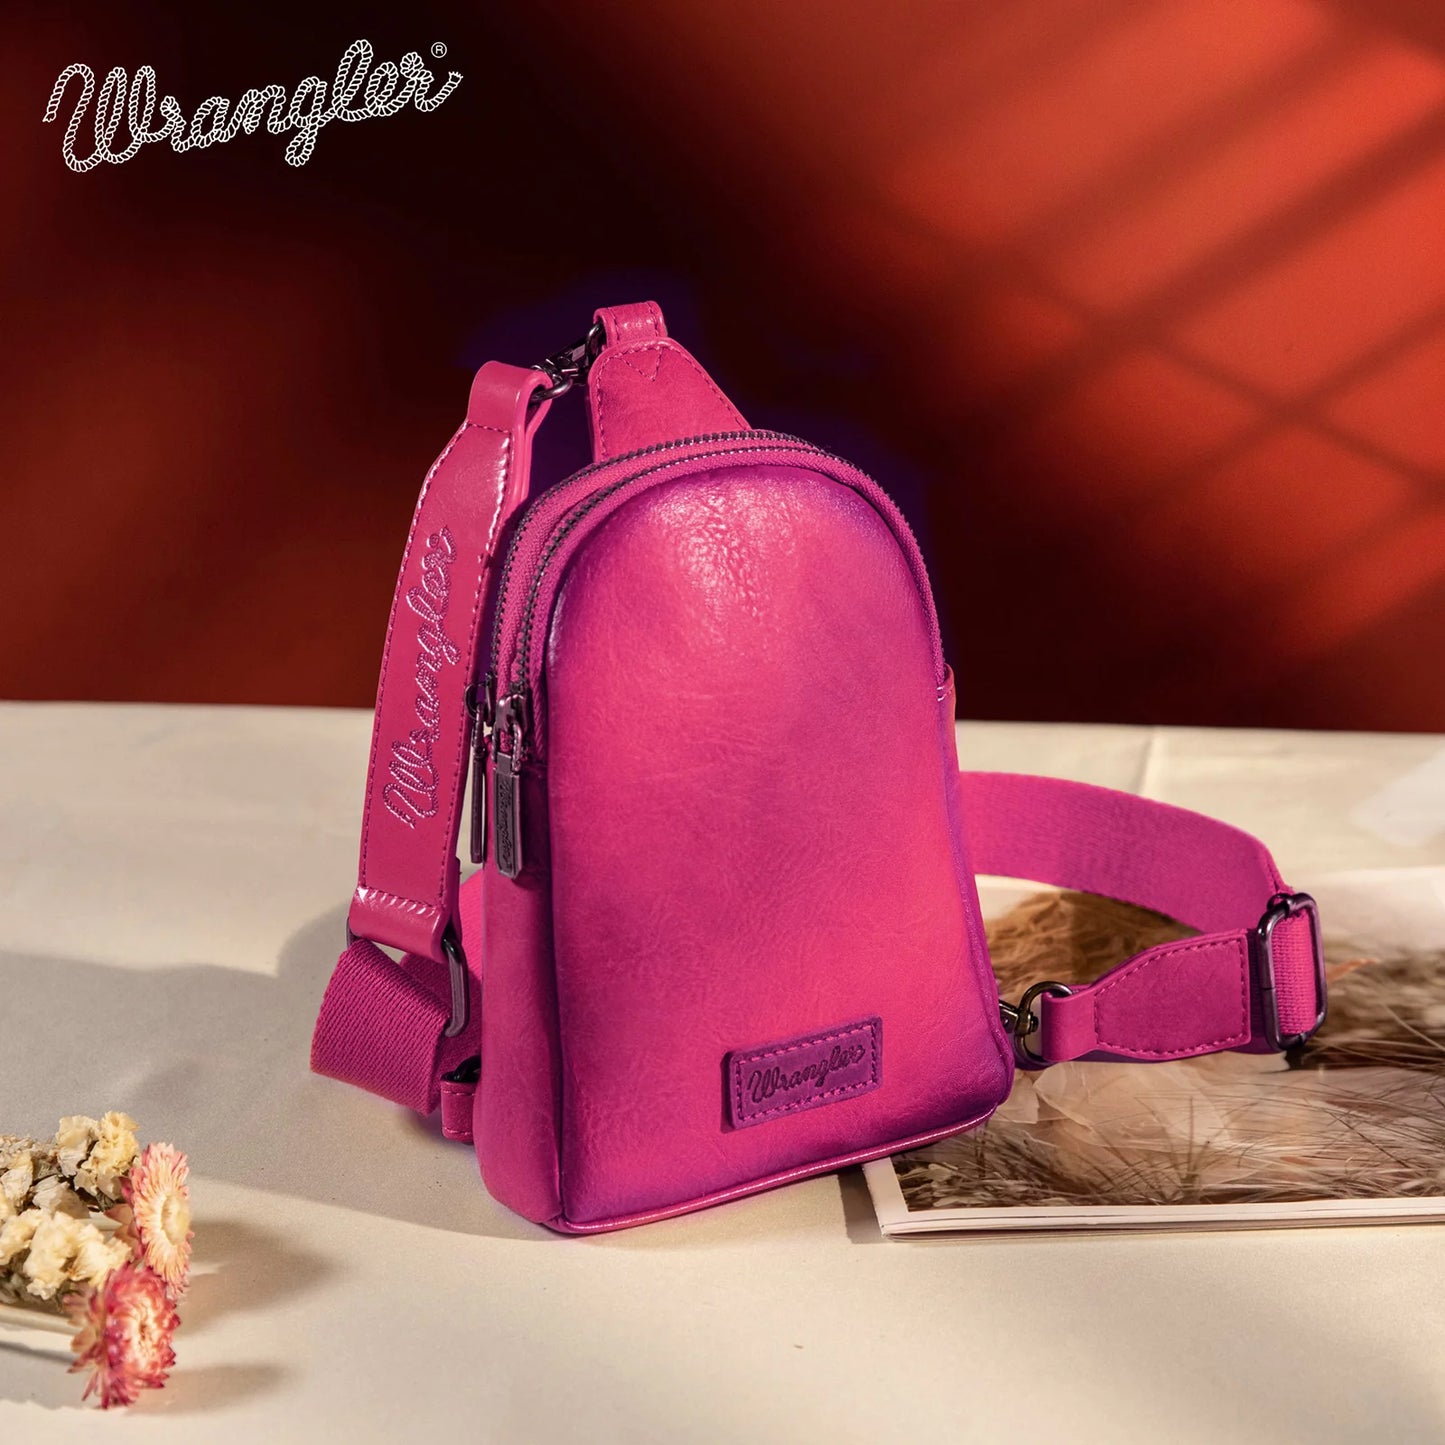 Wrangler Sling Bag *Hot Pink